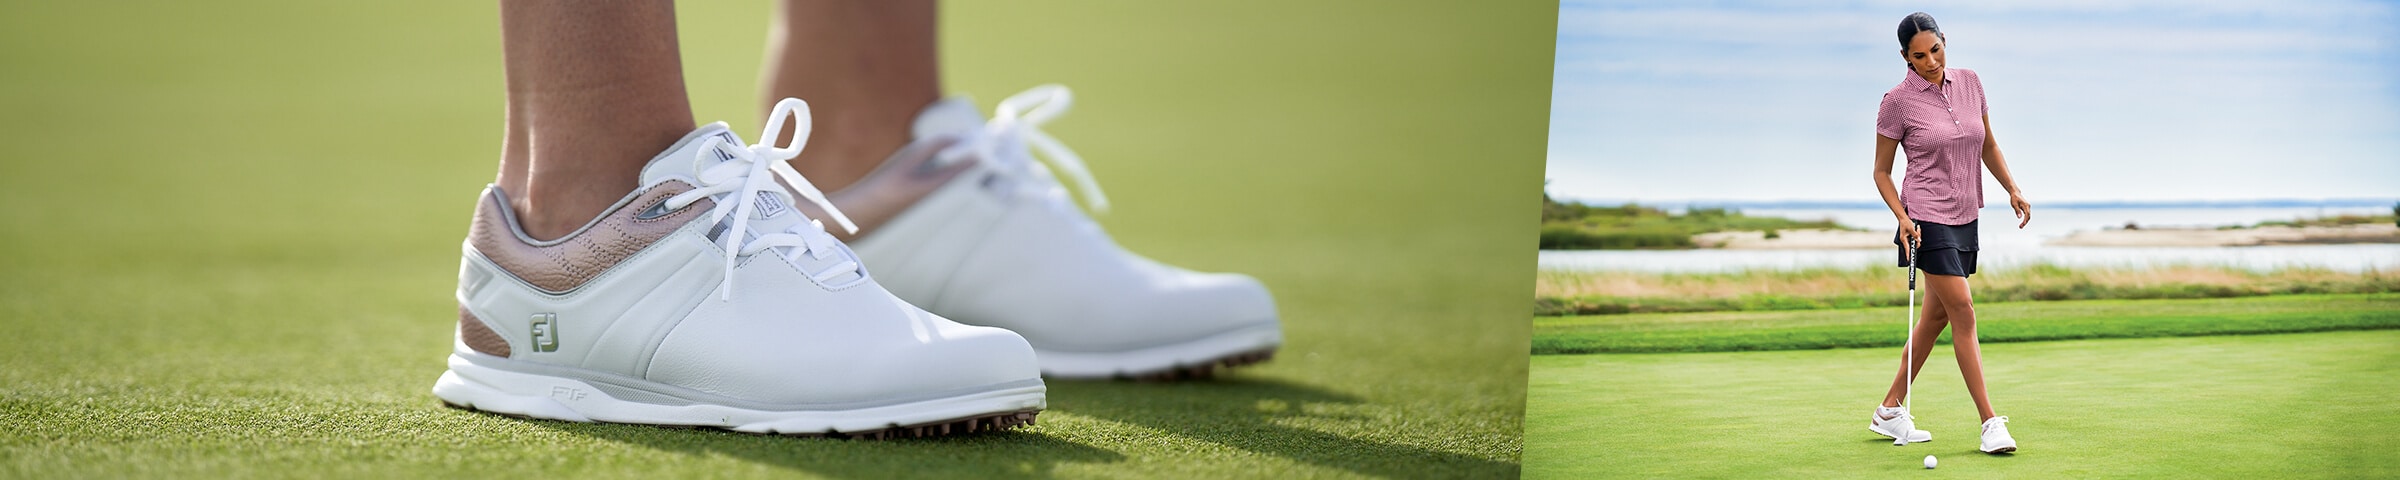 Chaussures de Golf sans Crampon Femmes